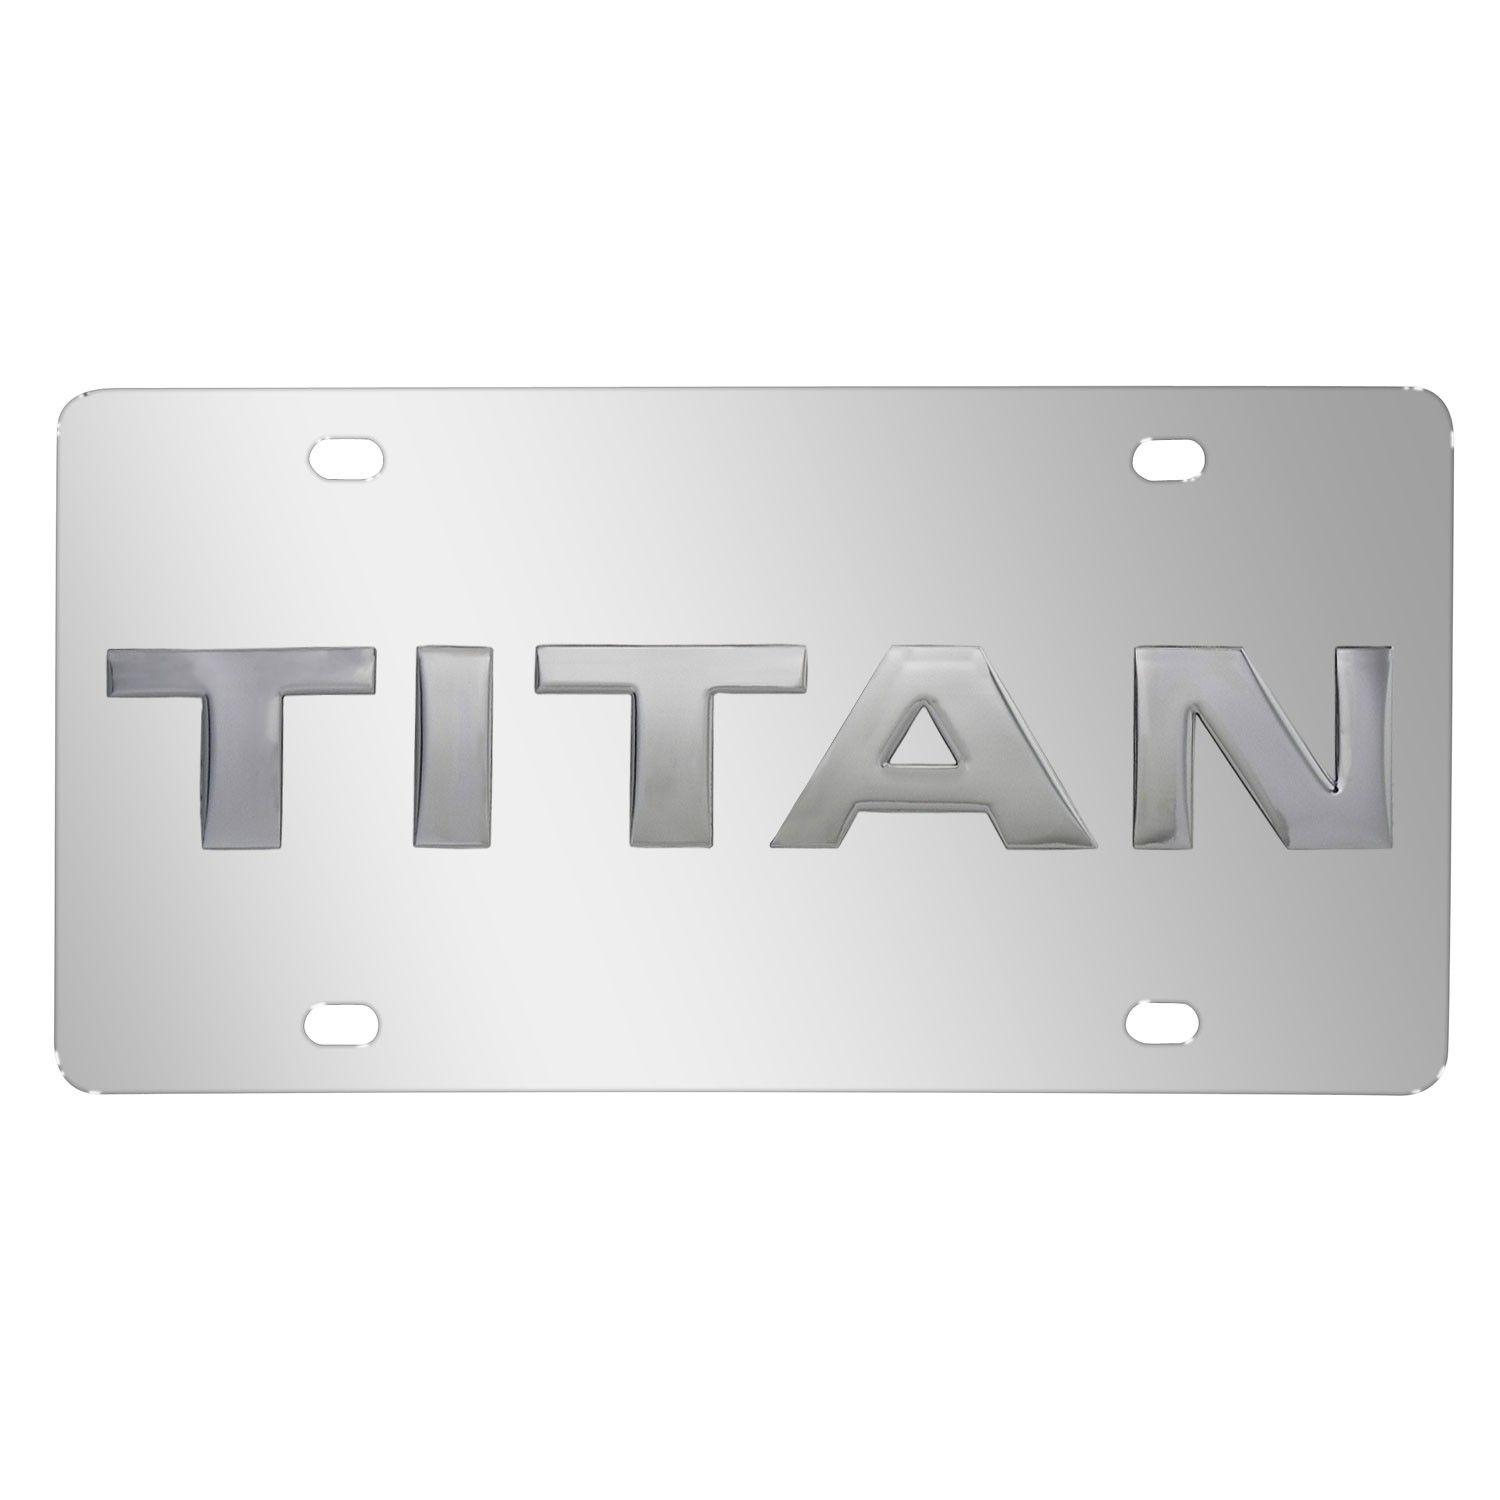 Nissan Titan Logo - Nissan Titan Nameplate 3D Logo Chrome Stainless Steel License Plate